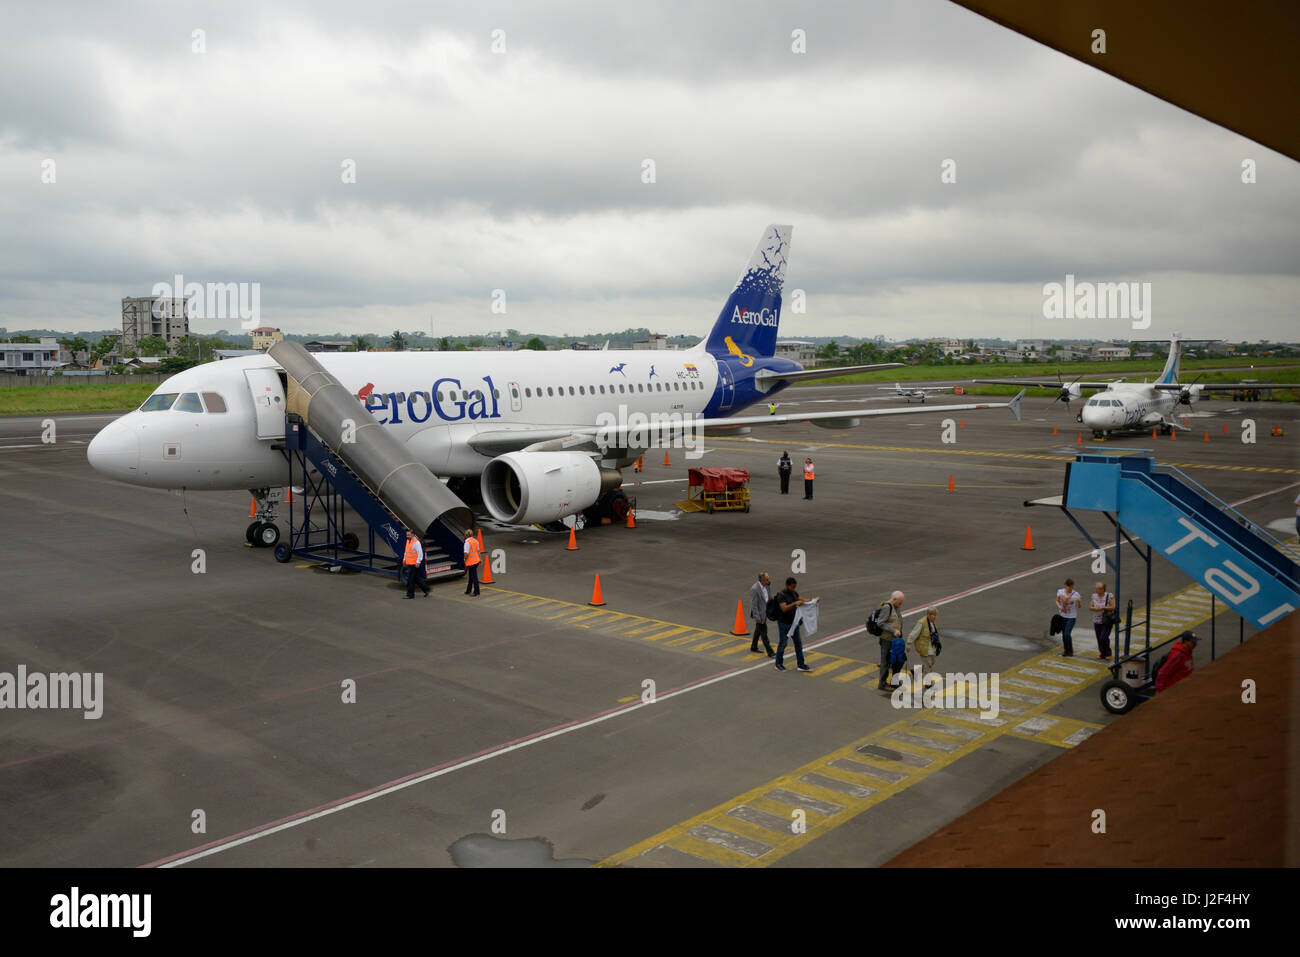 Ecuador, Orellana, San Francisco de Orellana, Coca. AeroGal Airbus A319 passengers disembarking at Coca Airport (Large format sizes available) Stock Photo